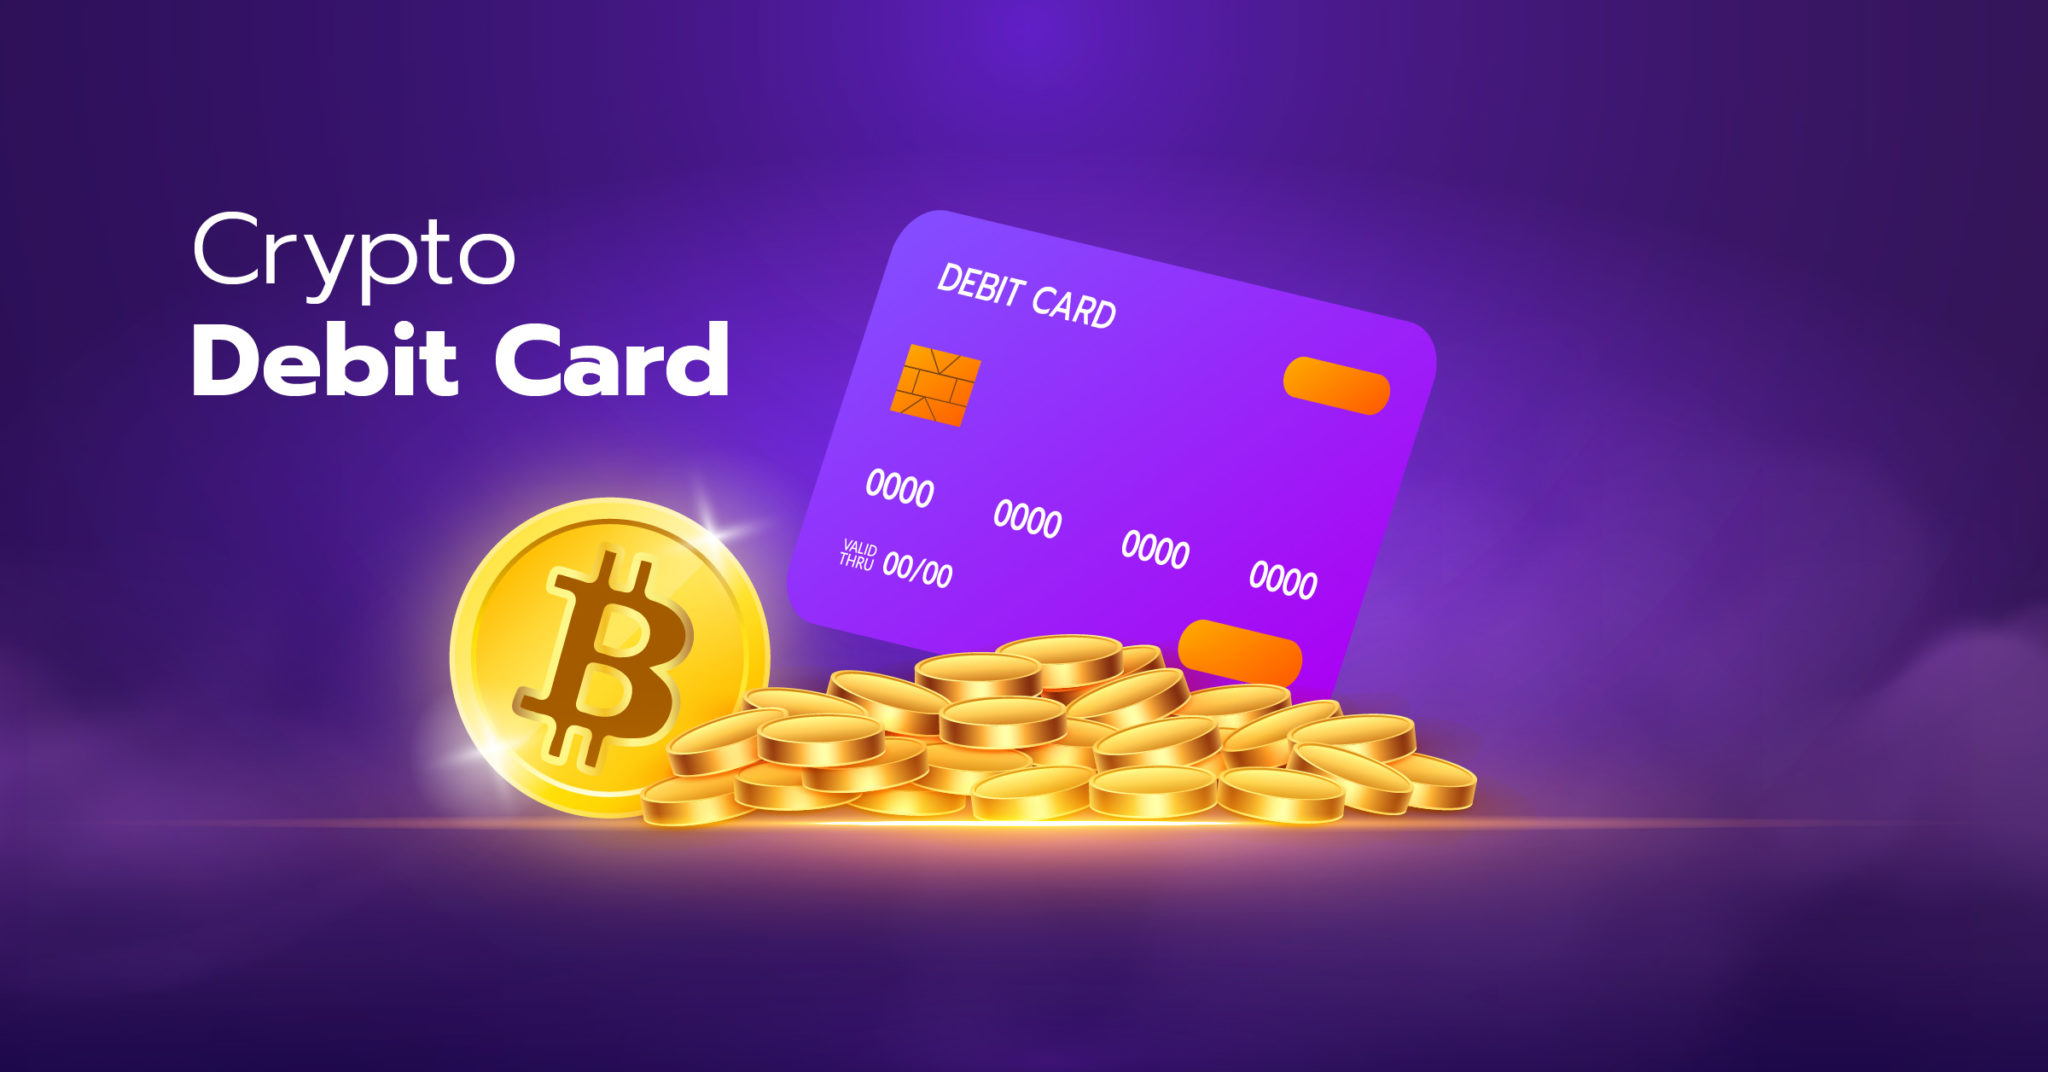 crypto.com debit card restrictions